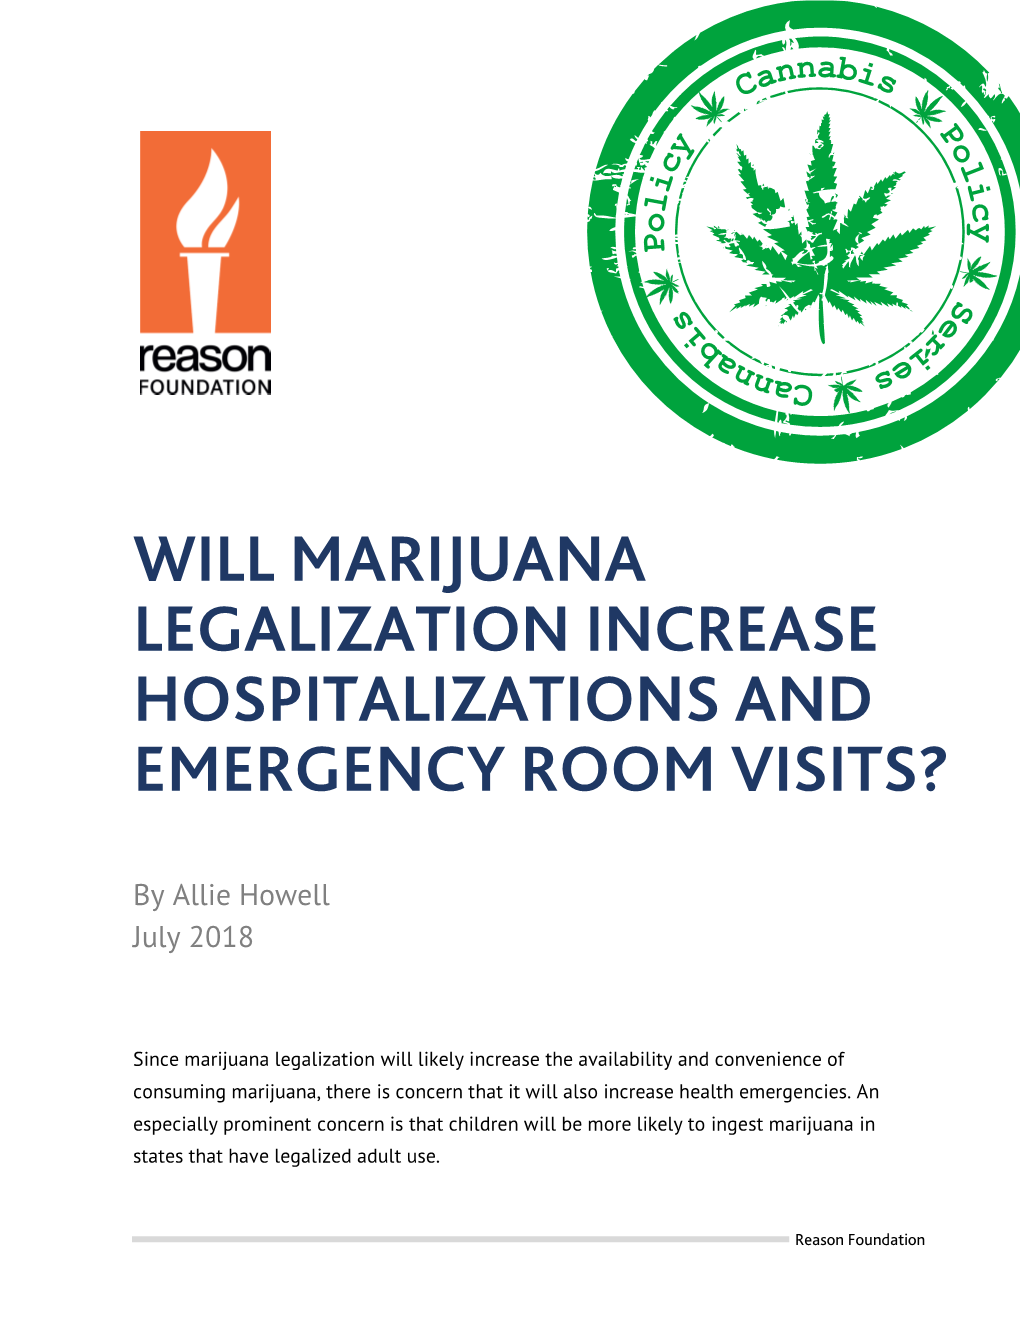 Will Marijuana Legalization Increase Hospitalizations and Emergency Room Visits?